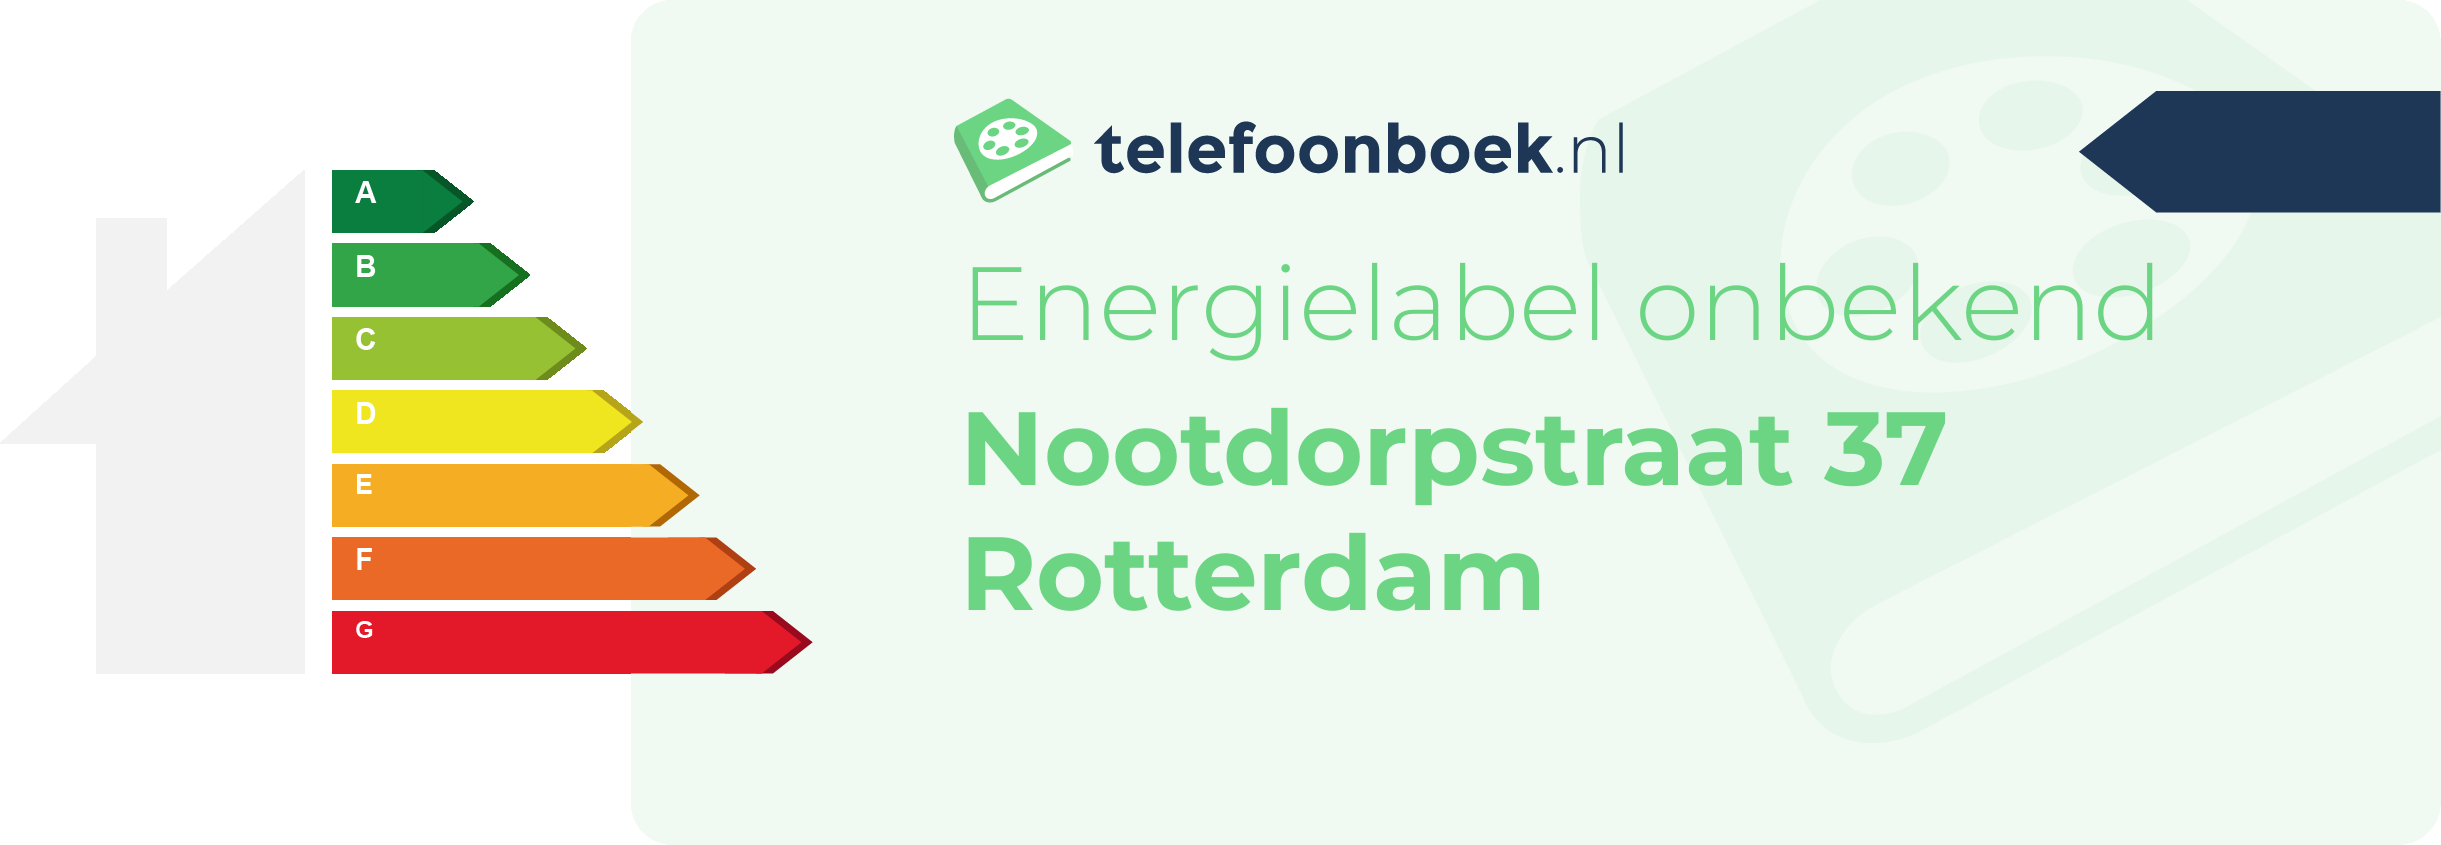 Energielabel Nootdorpstraat 37 Rotterdam